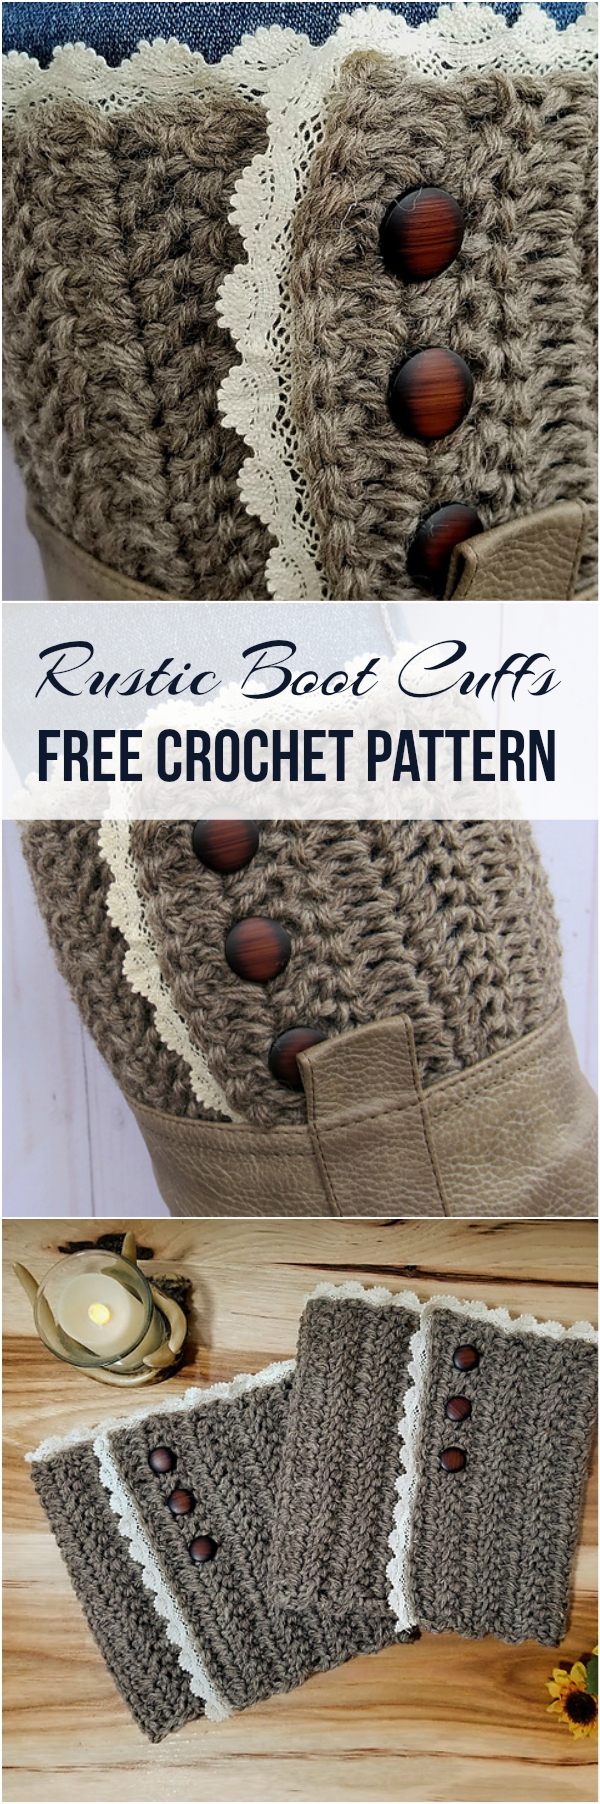 Rustic Boot Cuffs Free Crochet Pattern